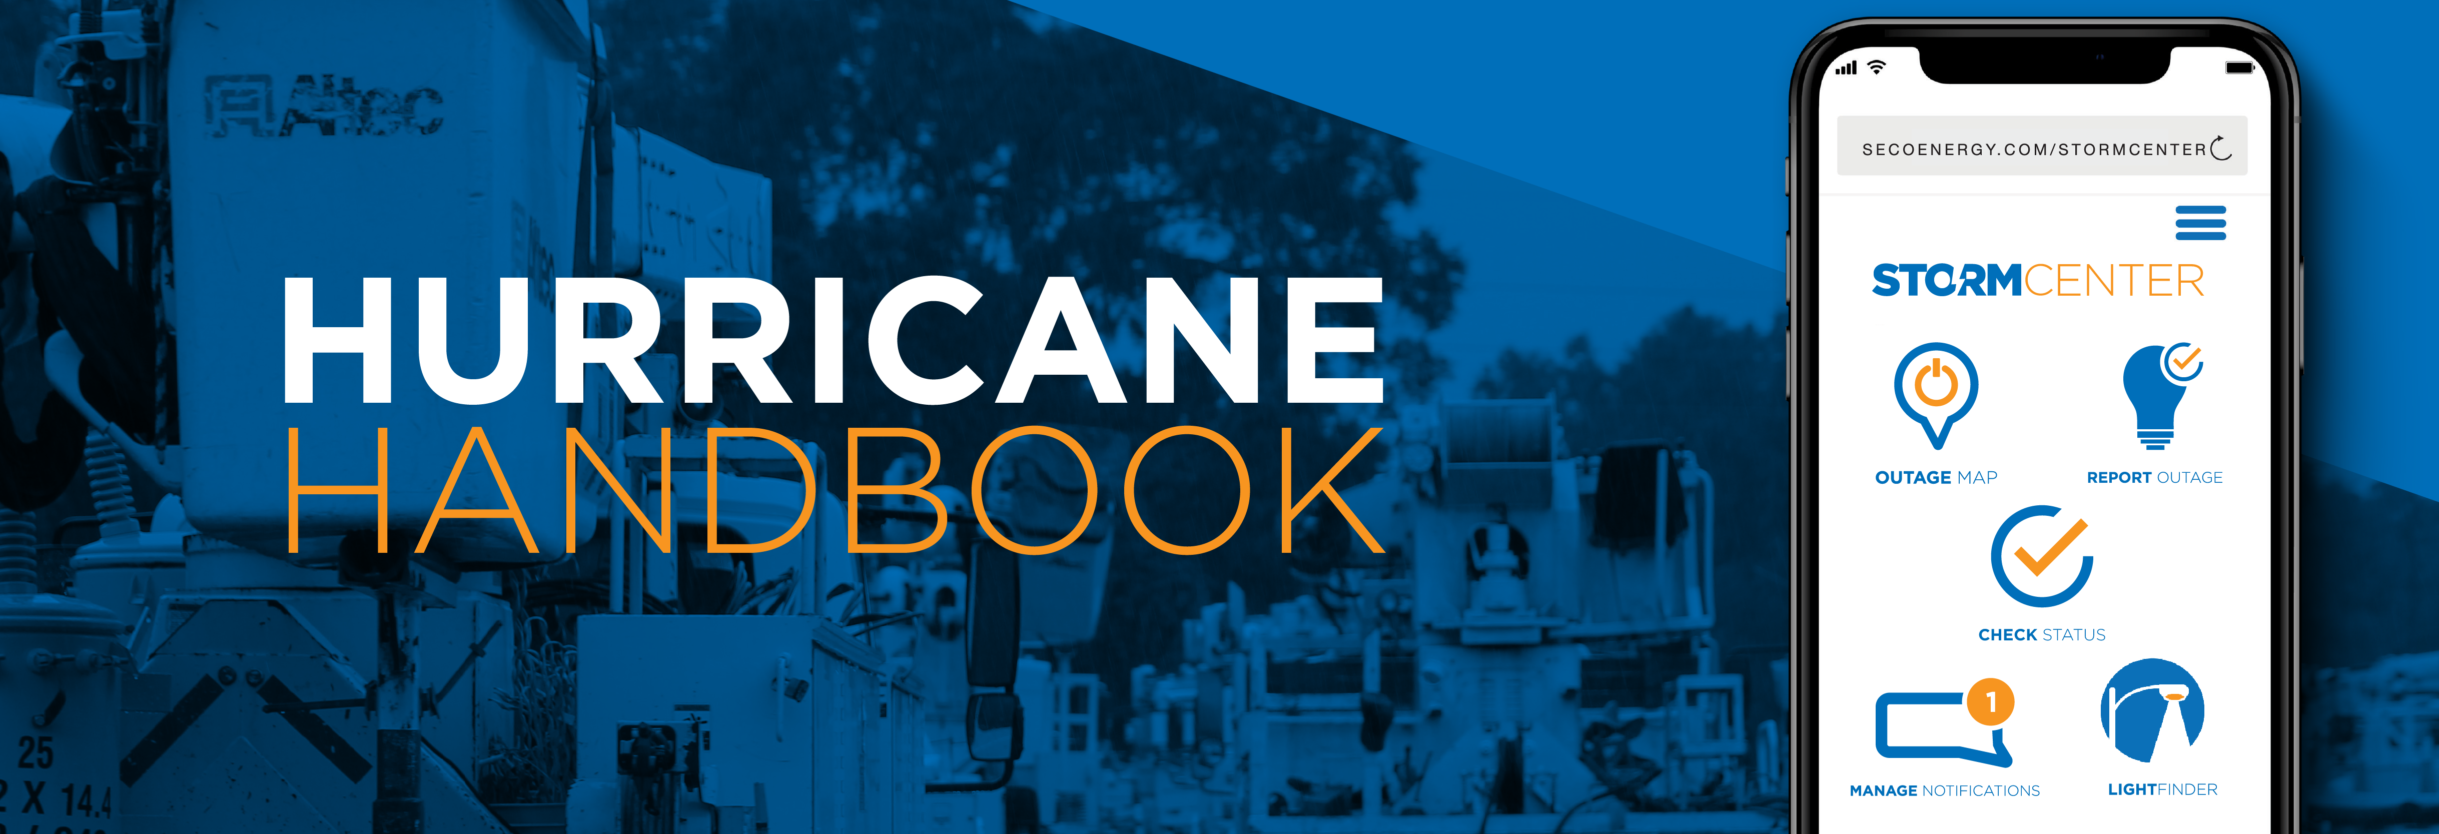 Hurricane Handbook